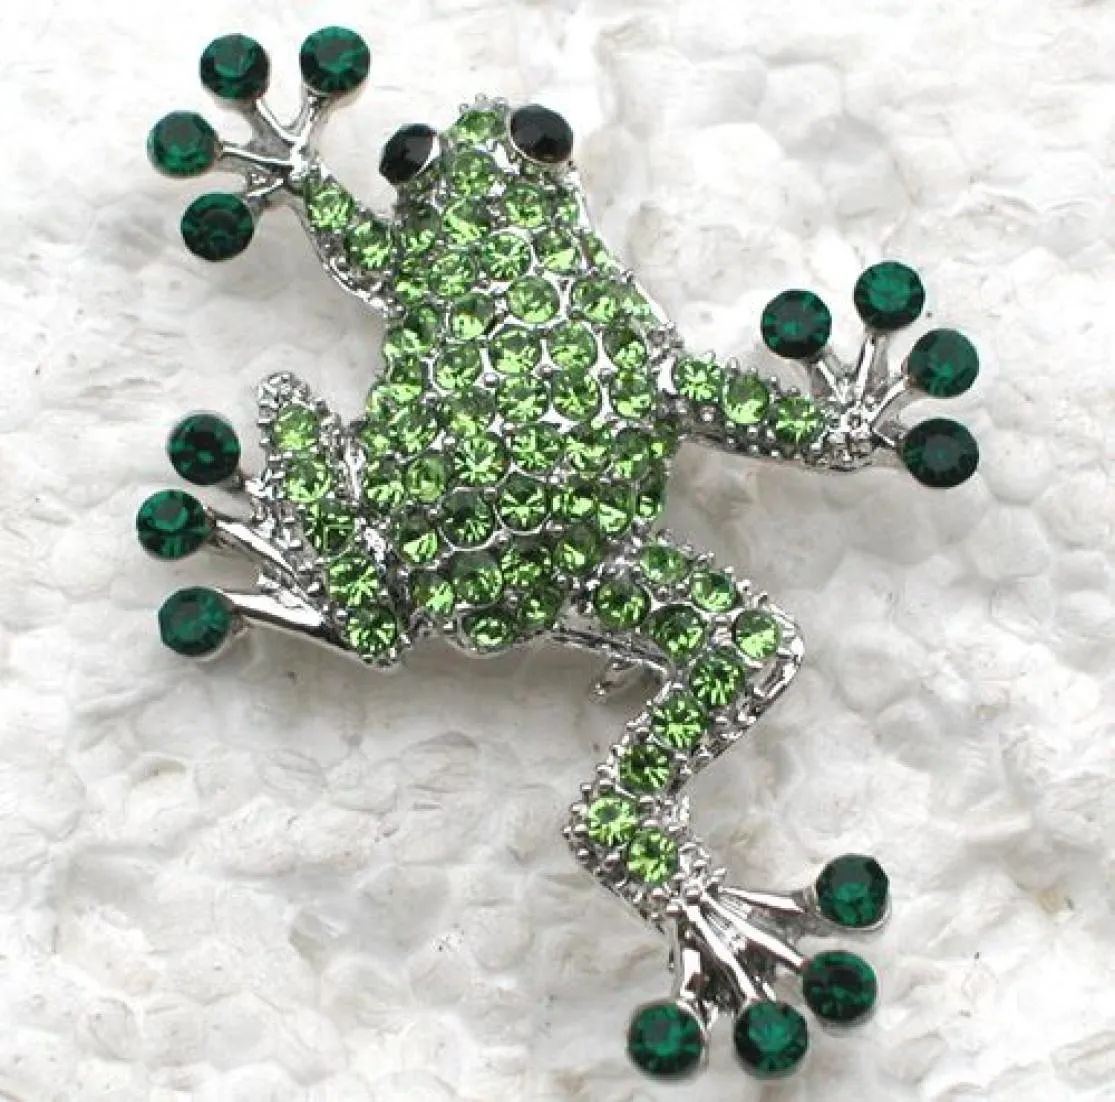 Broches de grenouille en cristal en cristaux Broche de costume de mode Broche bijoux Accessoires C5591419167